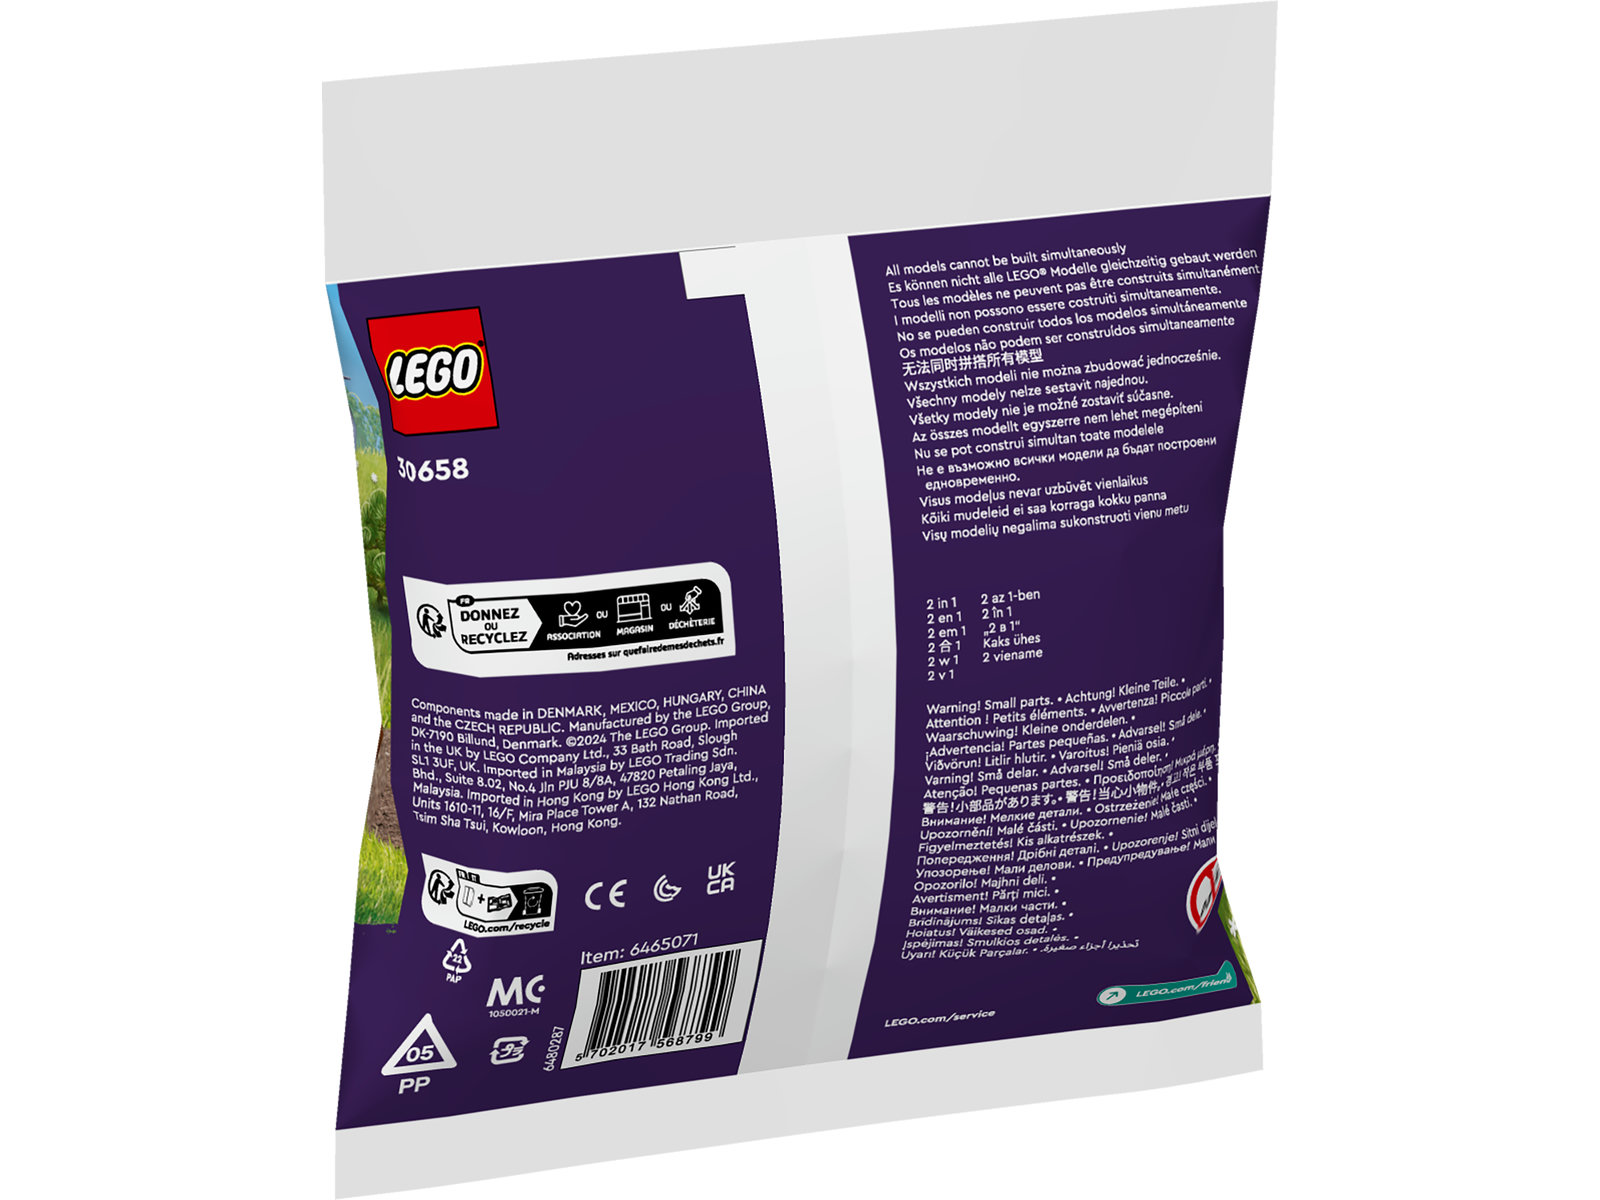 LEGO® Friends 30658 - Musikanhänger